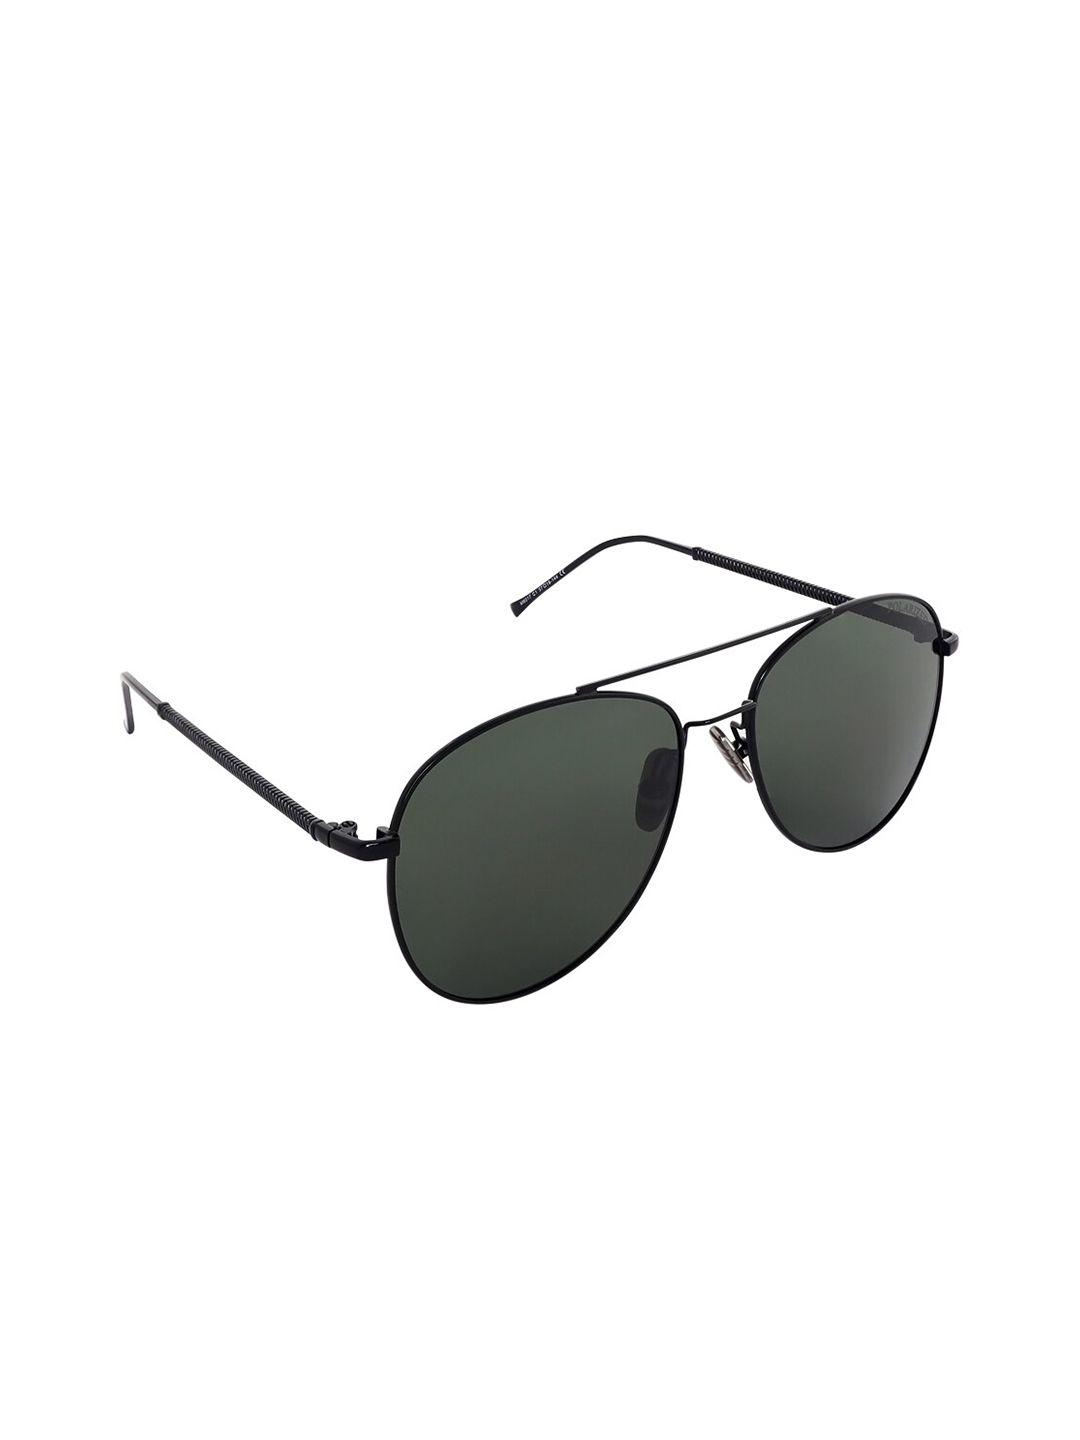 giordano unisex green lens & black aviator sunglasses ga6017c01